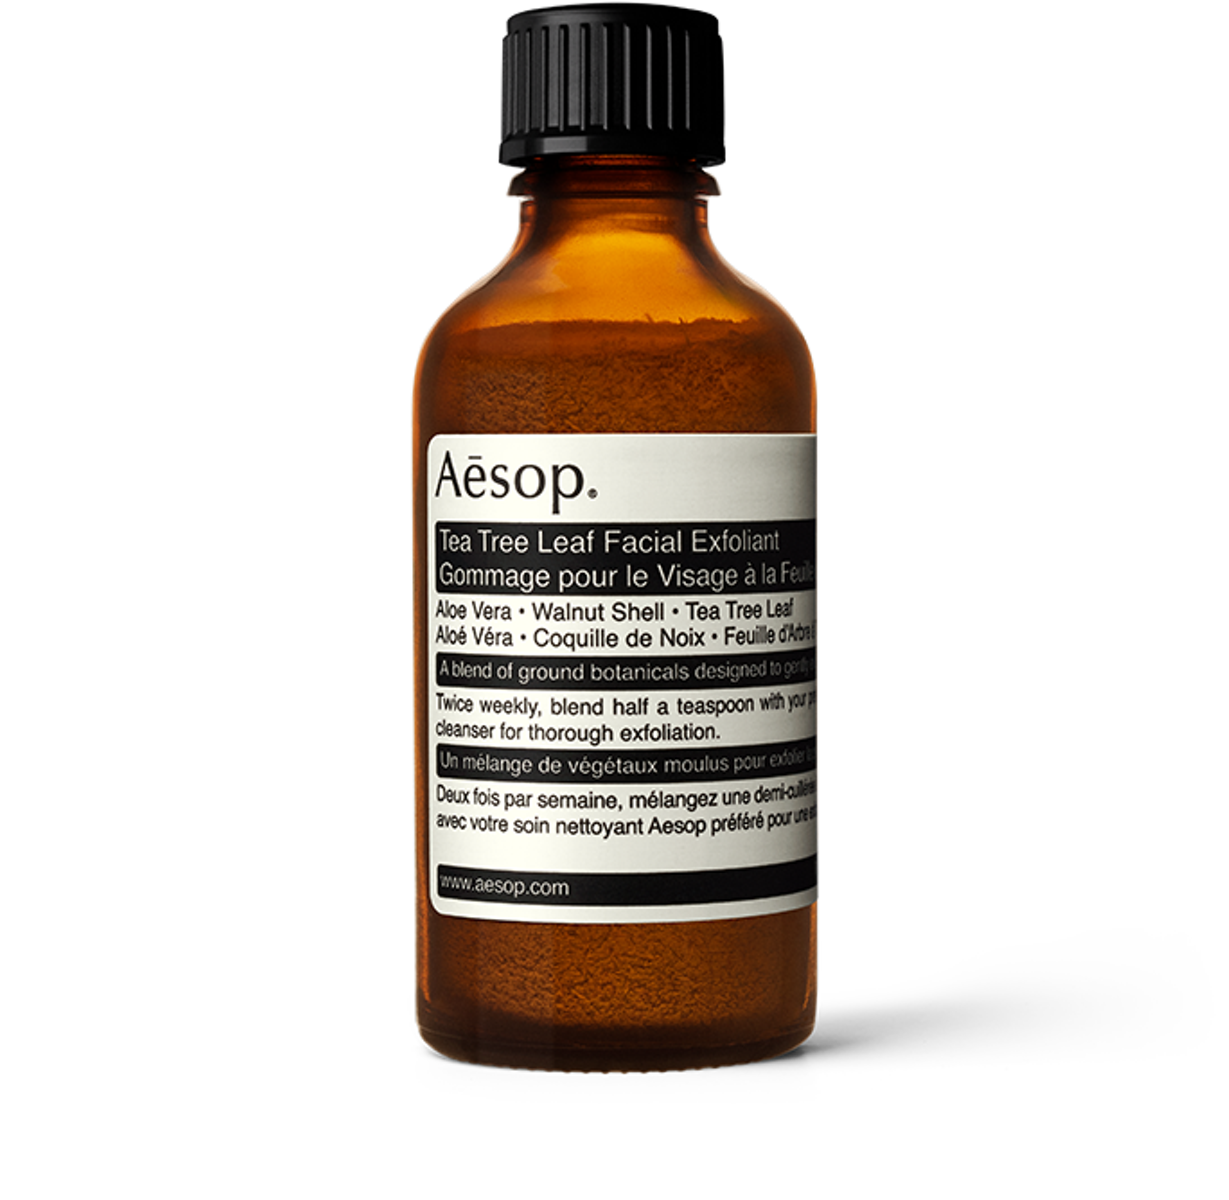 Aesop-Skin-Tea-Tree-Leaf-Facial-Exfoliant-30g-large